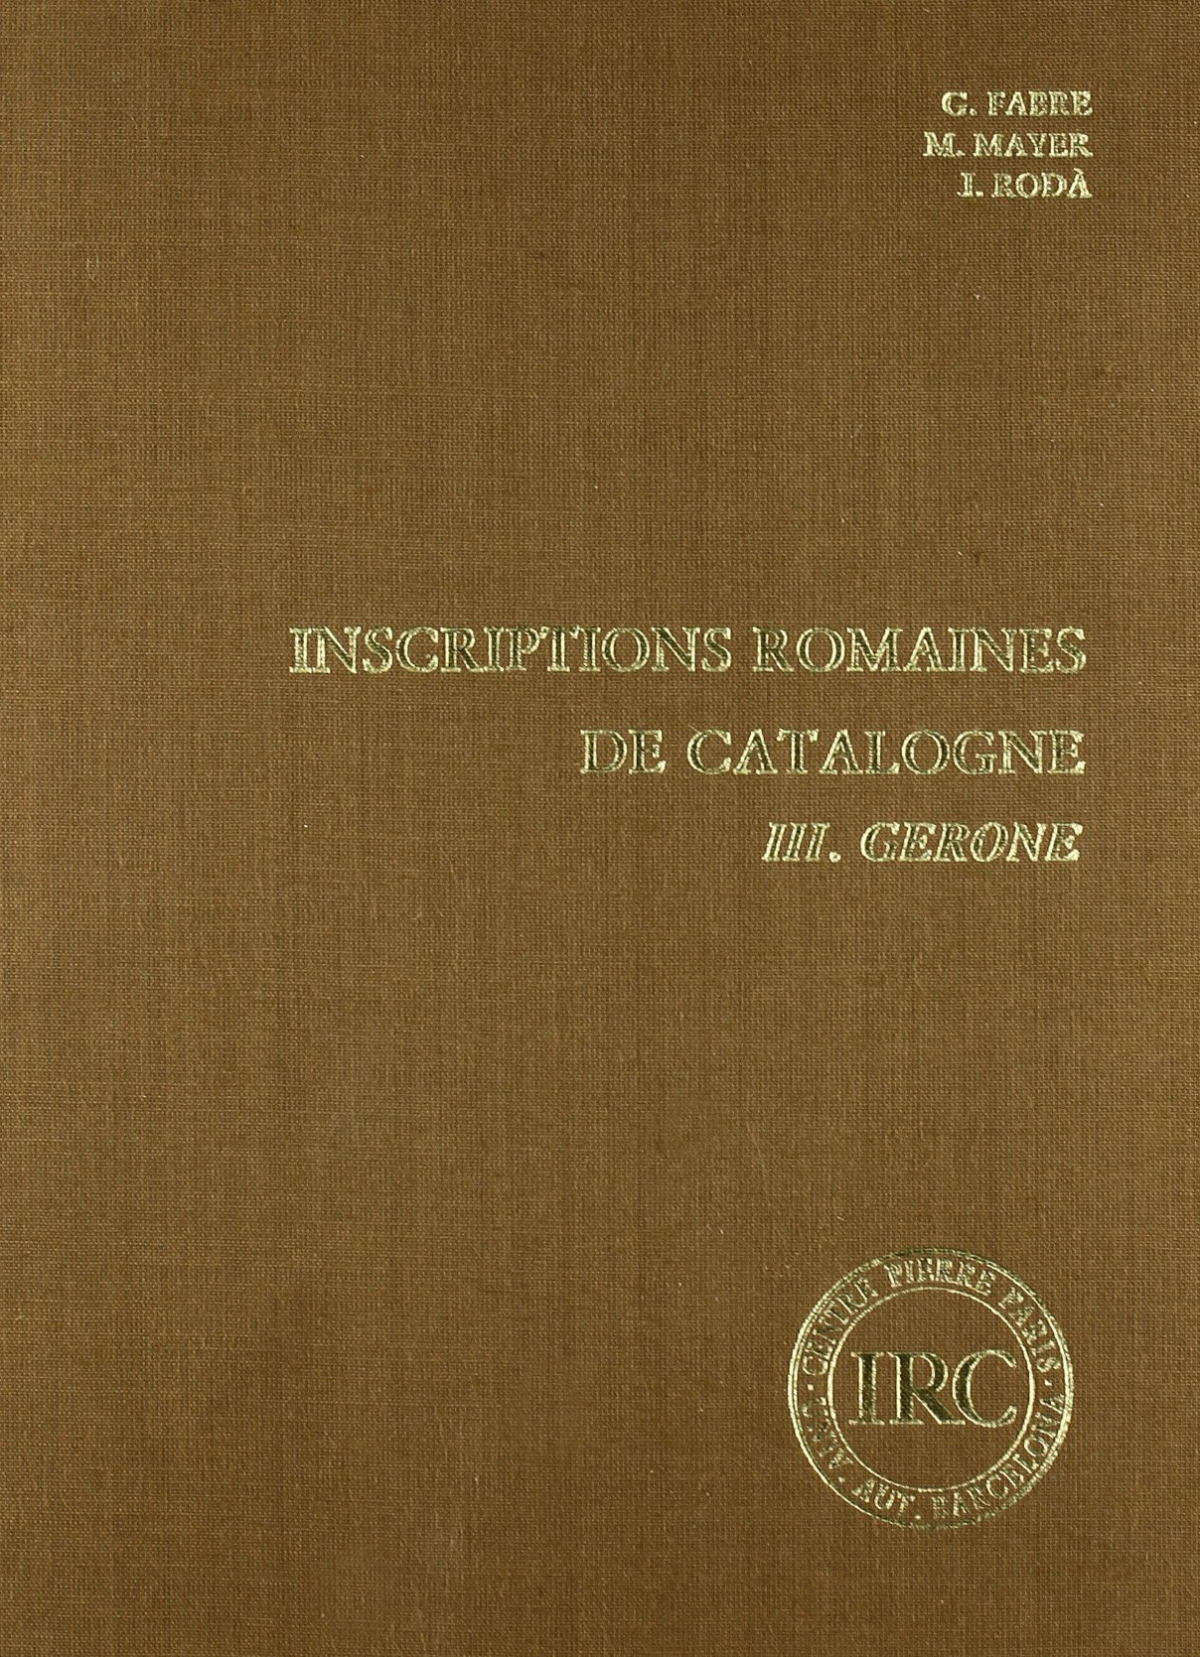 Inscriptions romanies de Catalogne III. Gerone - Fabre, Georges ... [et al.]